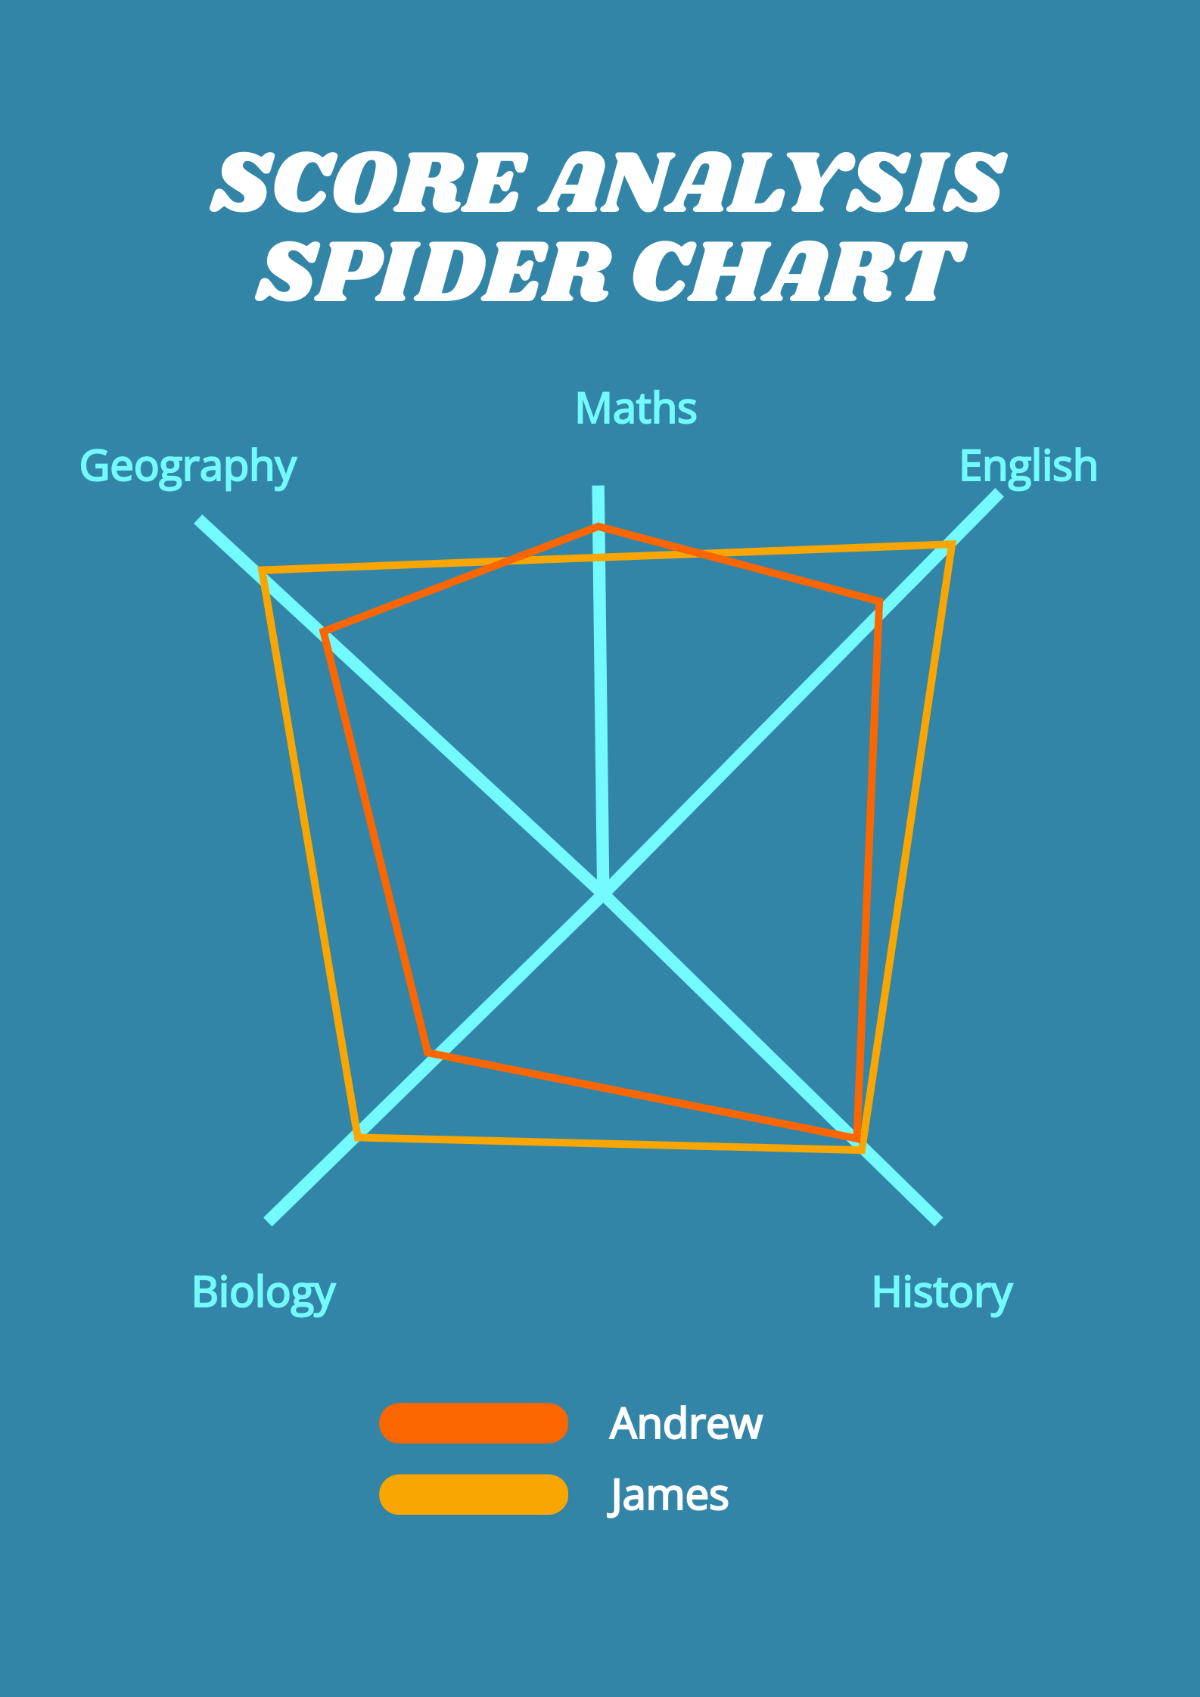 Score Analysis Spider Chart Template